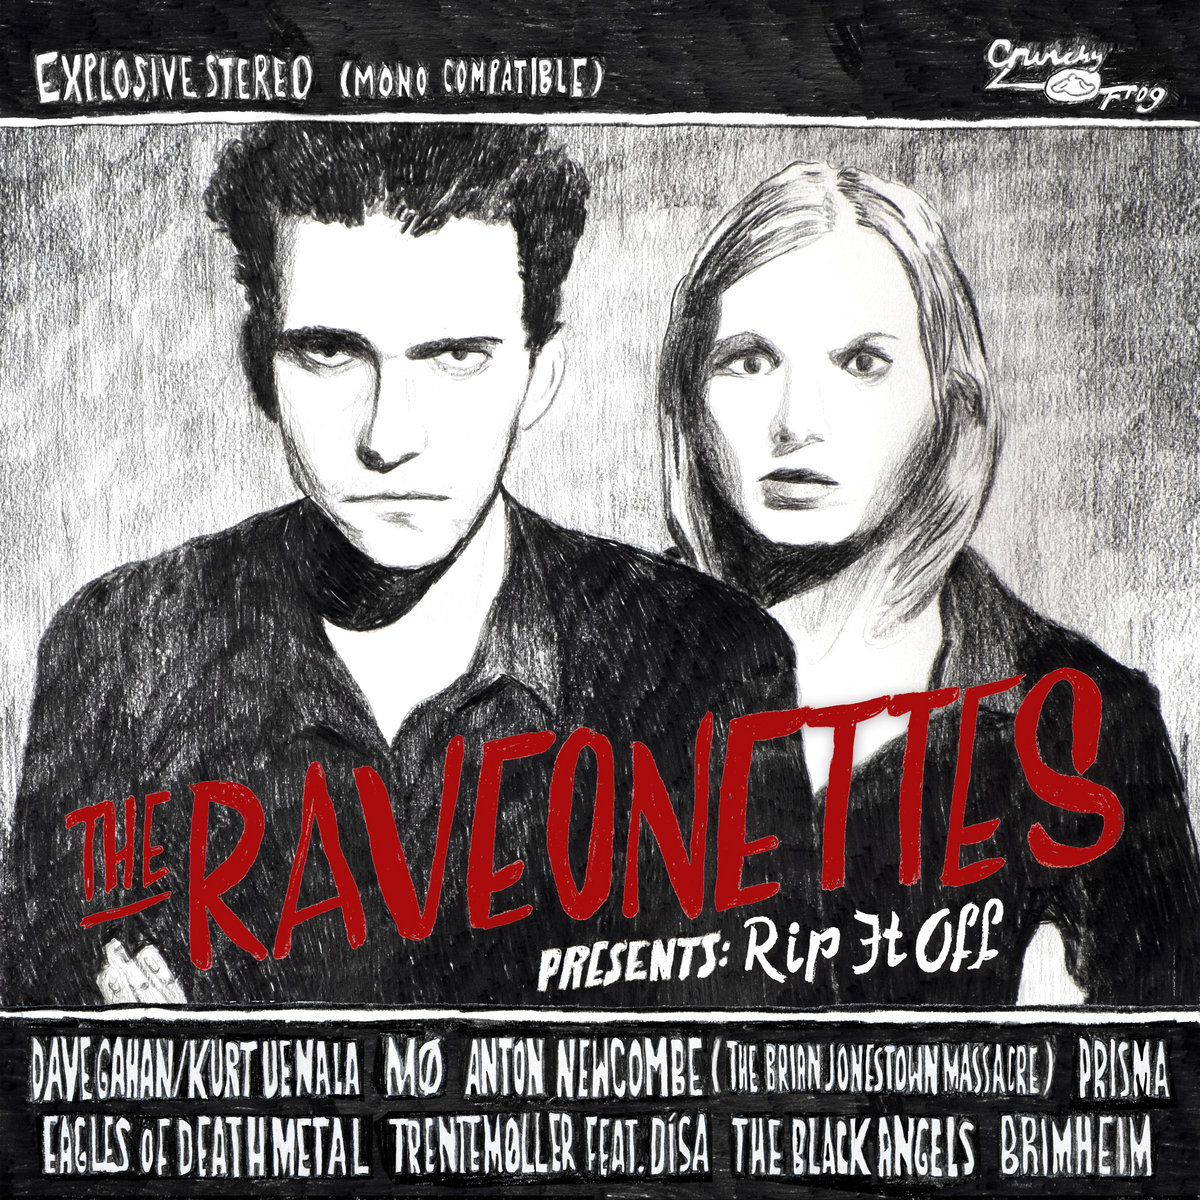 News – The Raveonettes Presents: Rip It Off